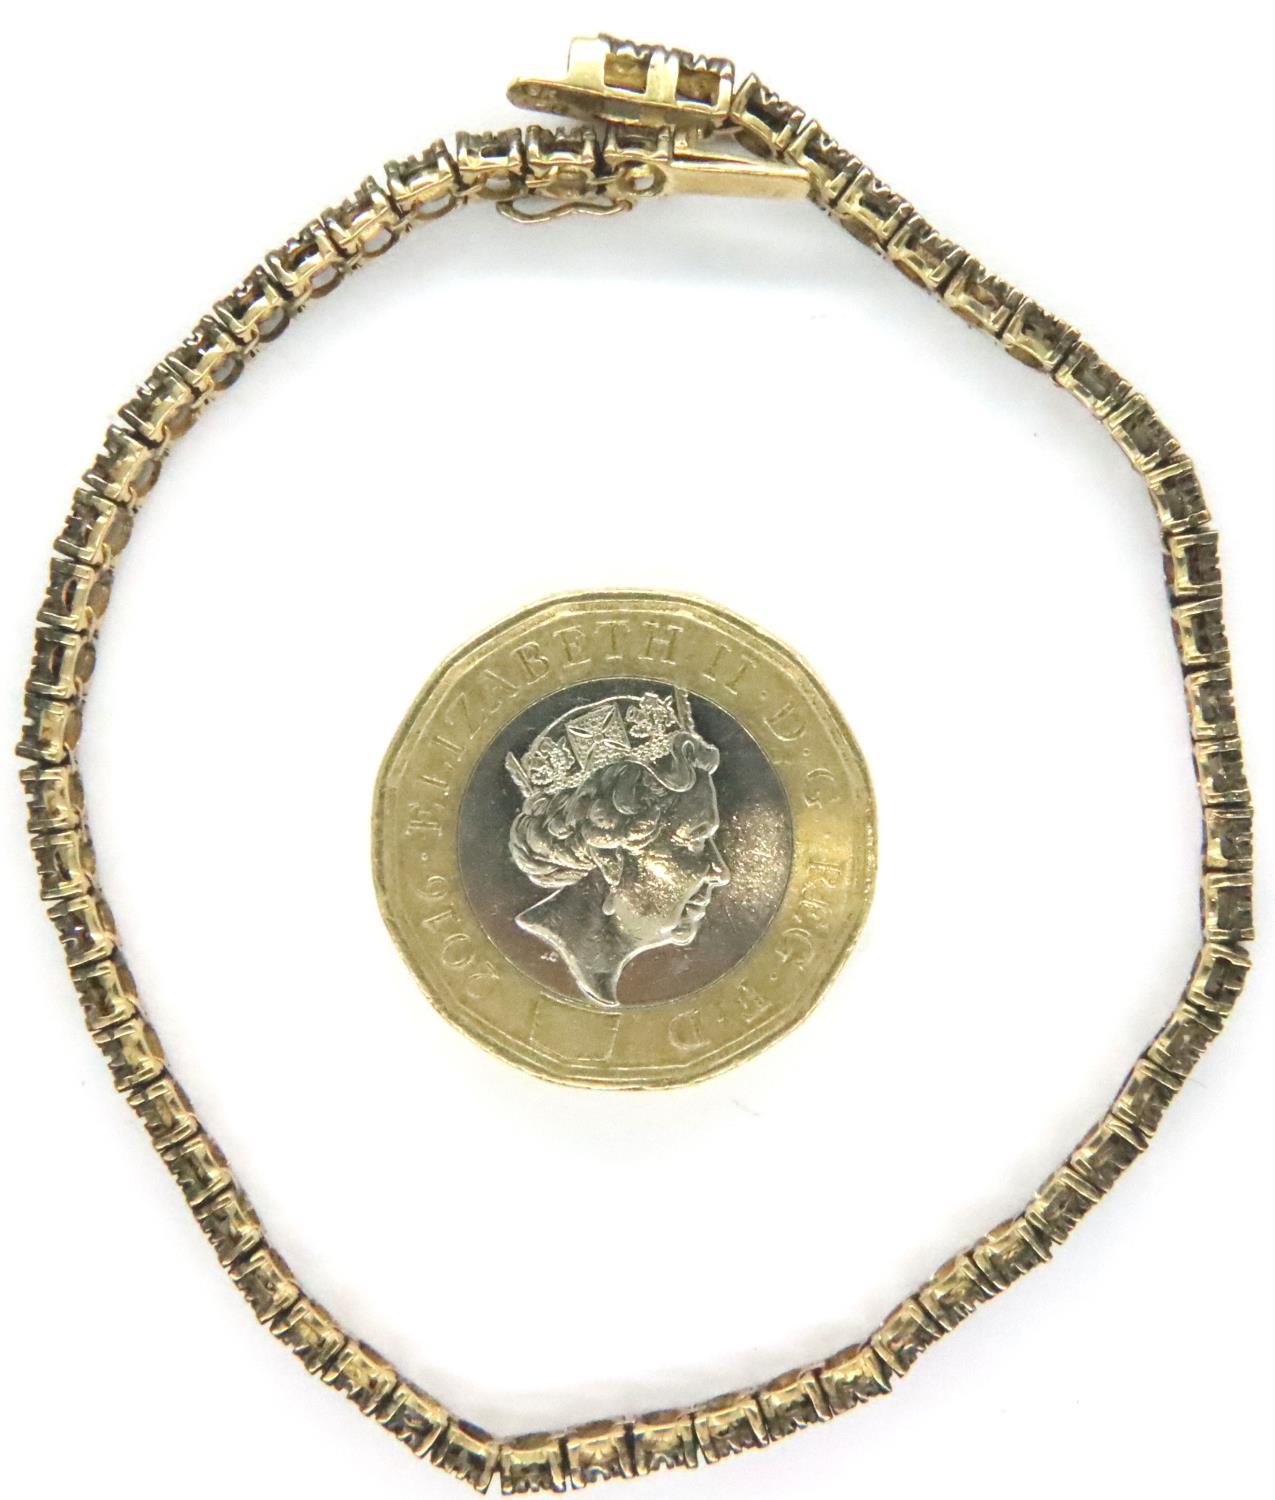 9ct gold black diamond set tennis bracelet, diamond weight totals approximately 0.5cts, L: 18 cm, - Image 2 of 3